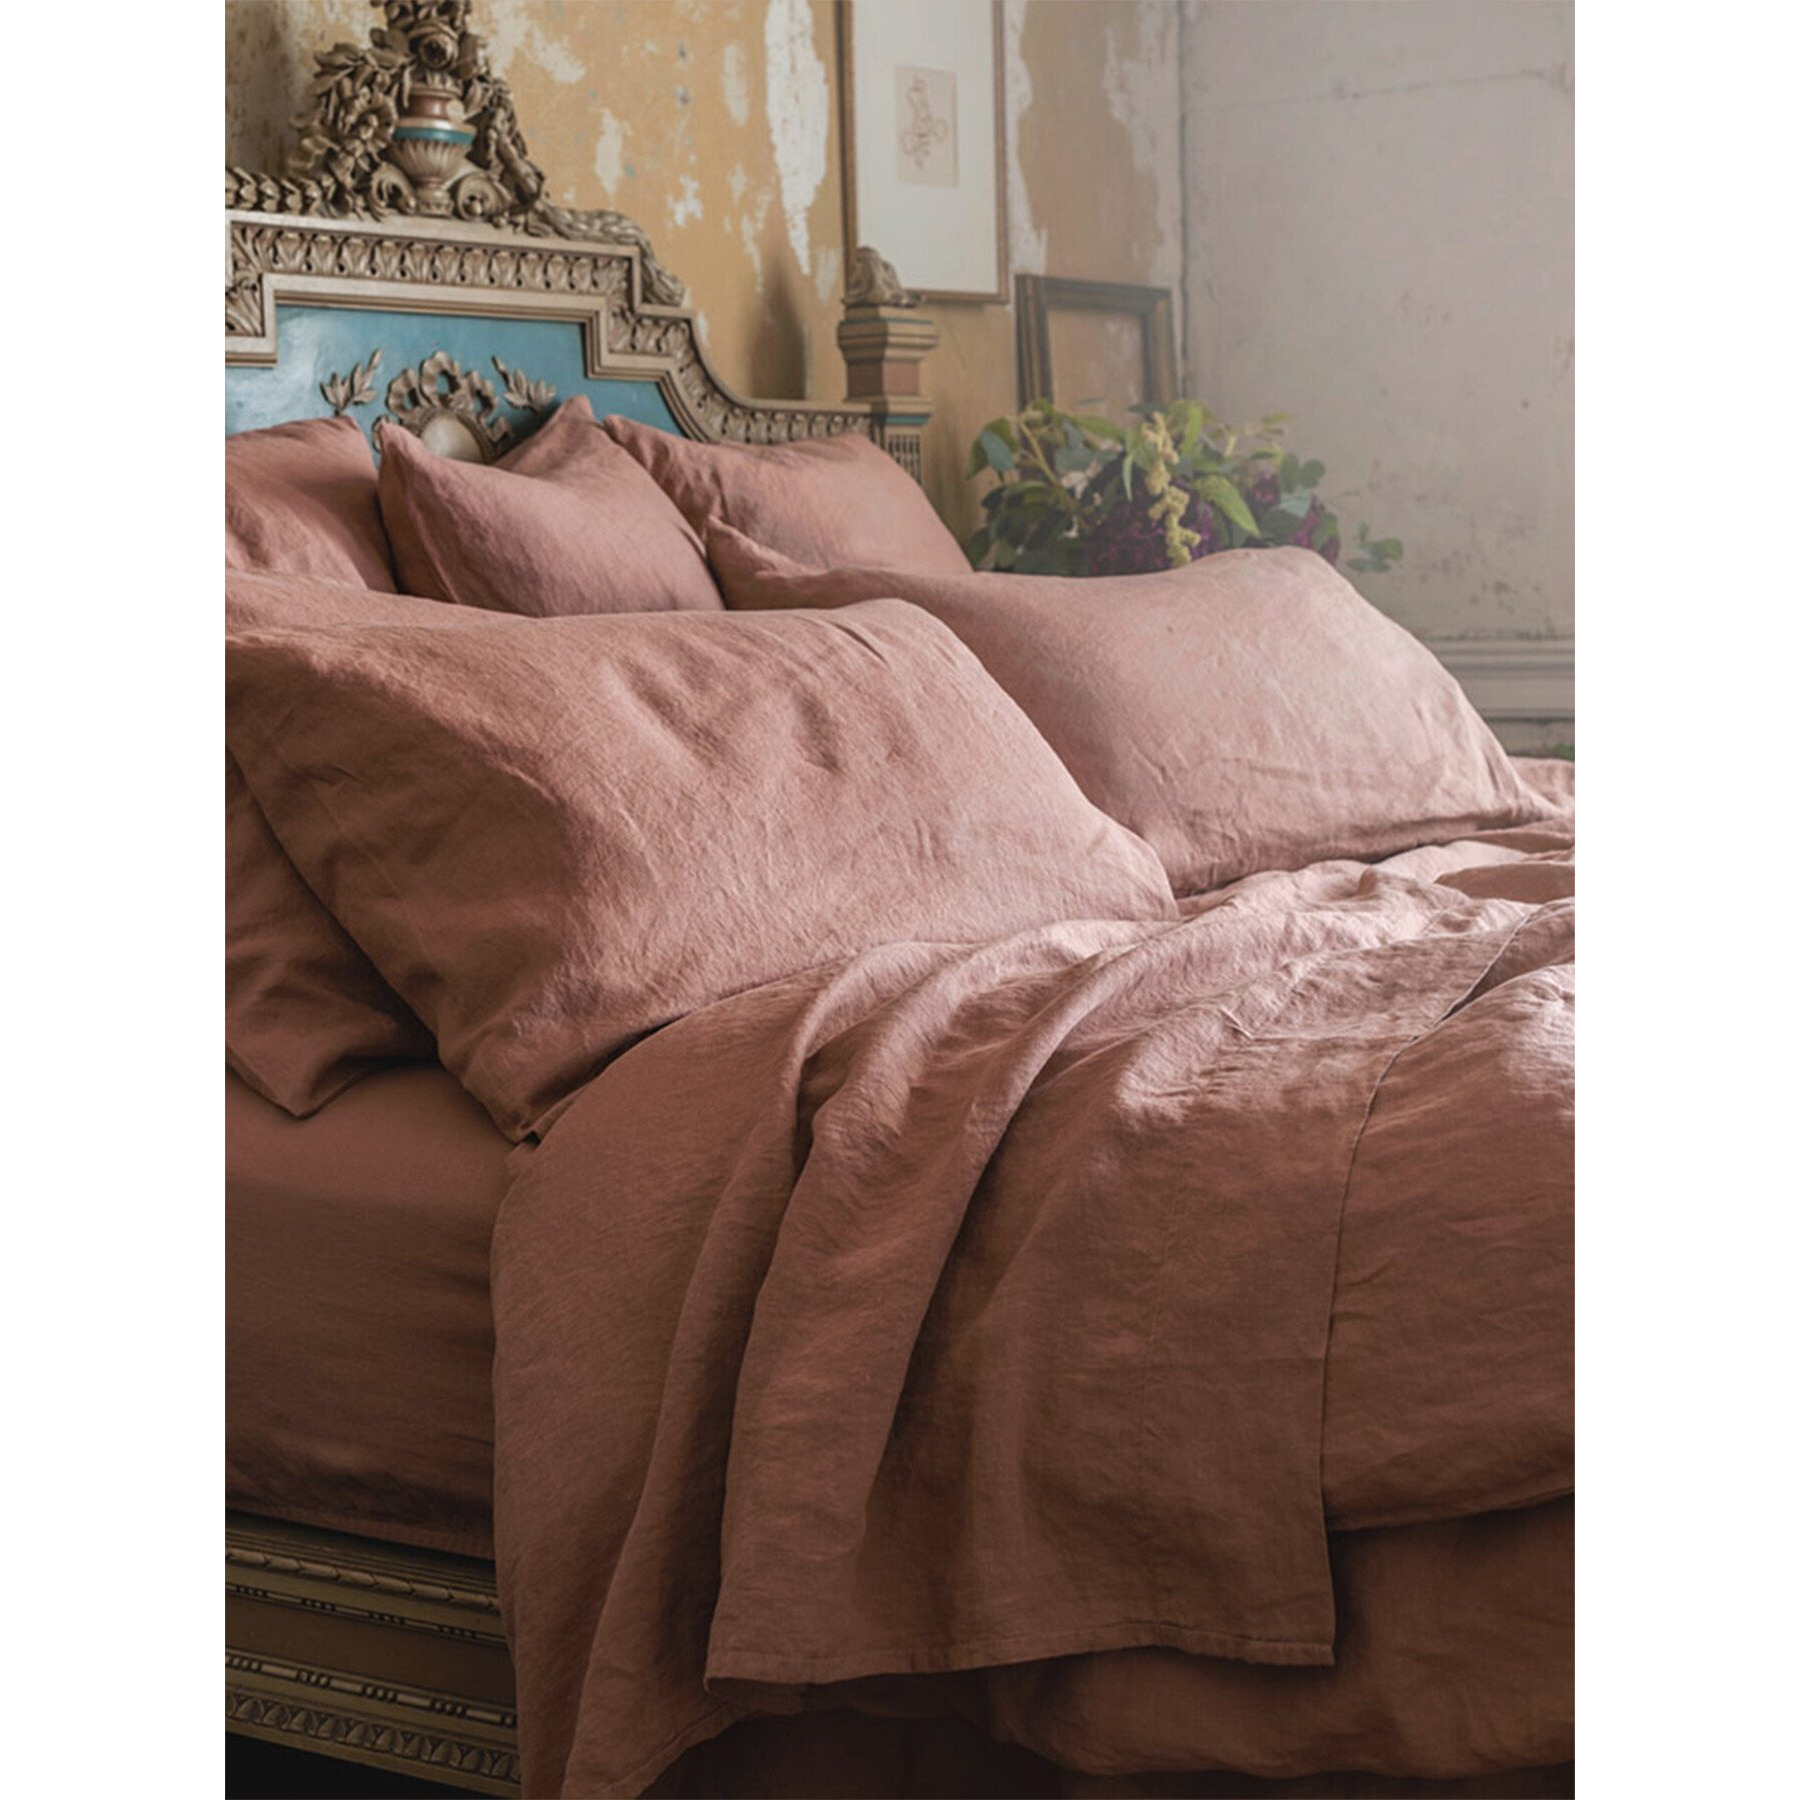 Piglet in Bed Linen Flat Sheet - Size Single Tan - image 1